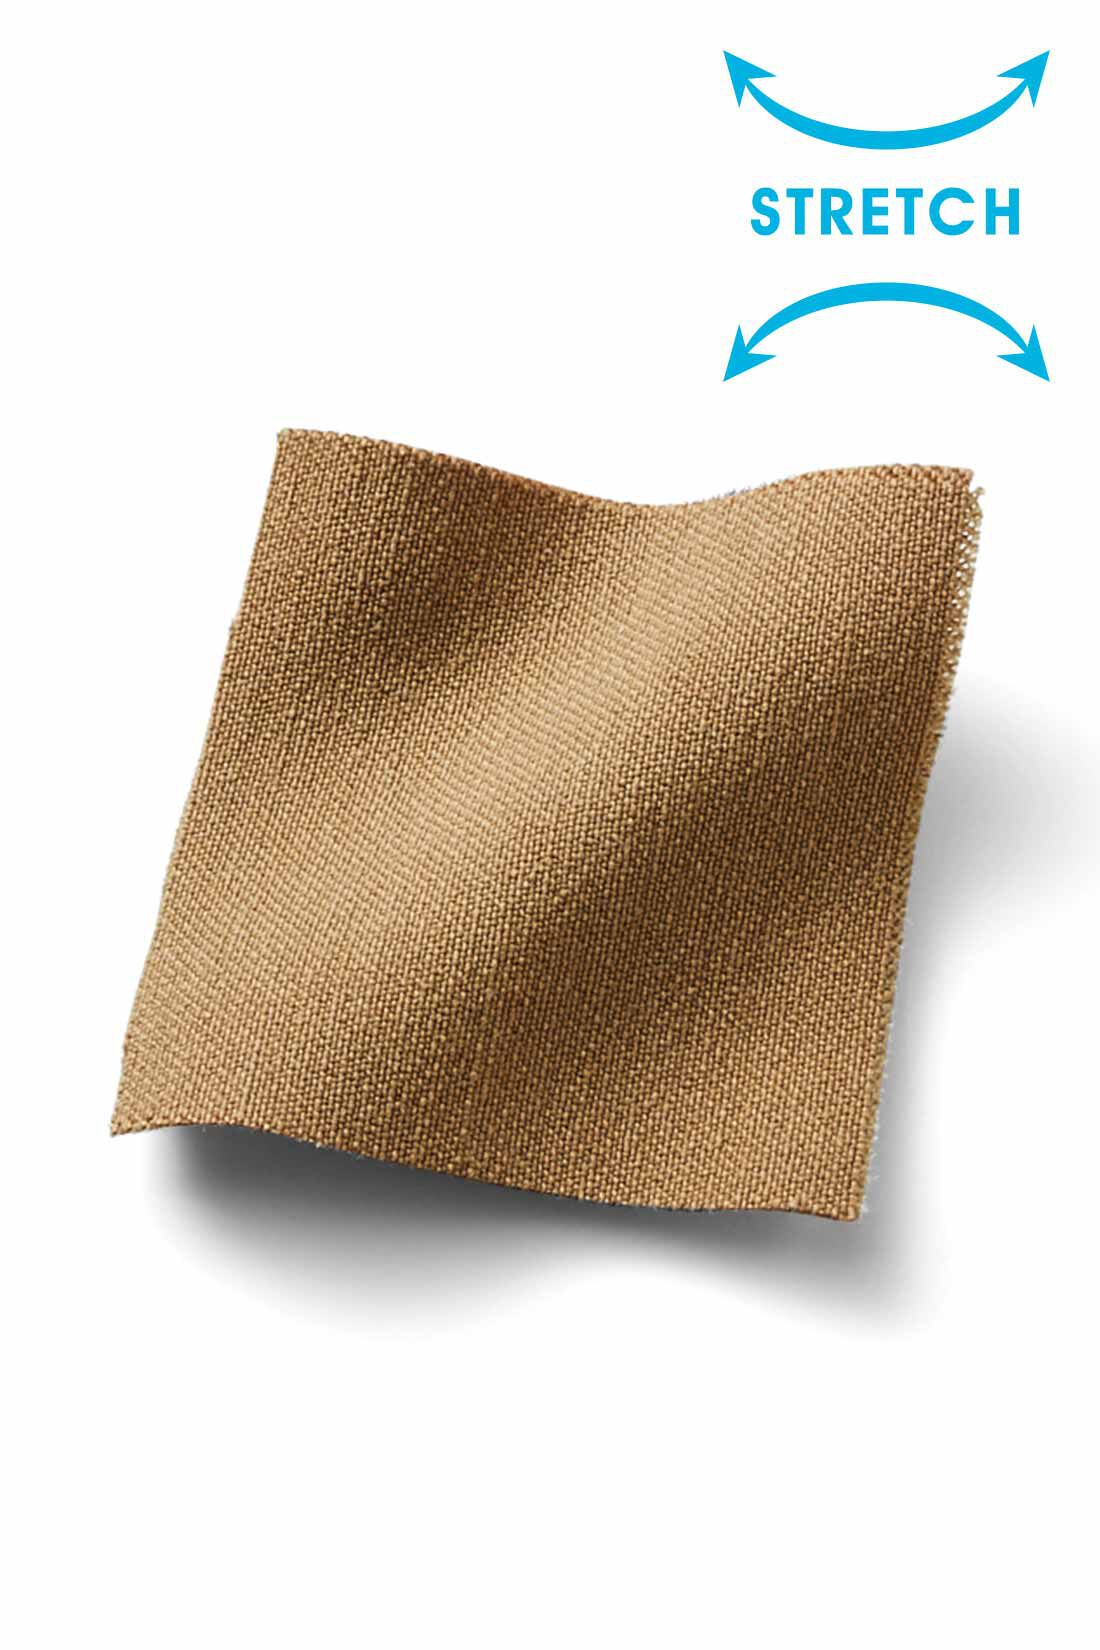 IEDIT[イディット]　ウエストメッシュで快適 ストレッチ布はく素材の美脚レギンスパンツ〈ブラック〉|カットソーみたいなはき心地ながら、きちんと見えもかなう布はく素材。 ※お届けするカラーとは異なります。